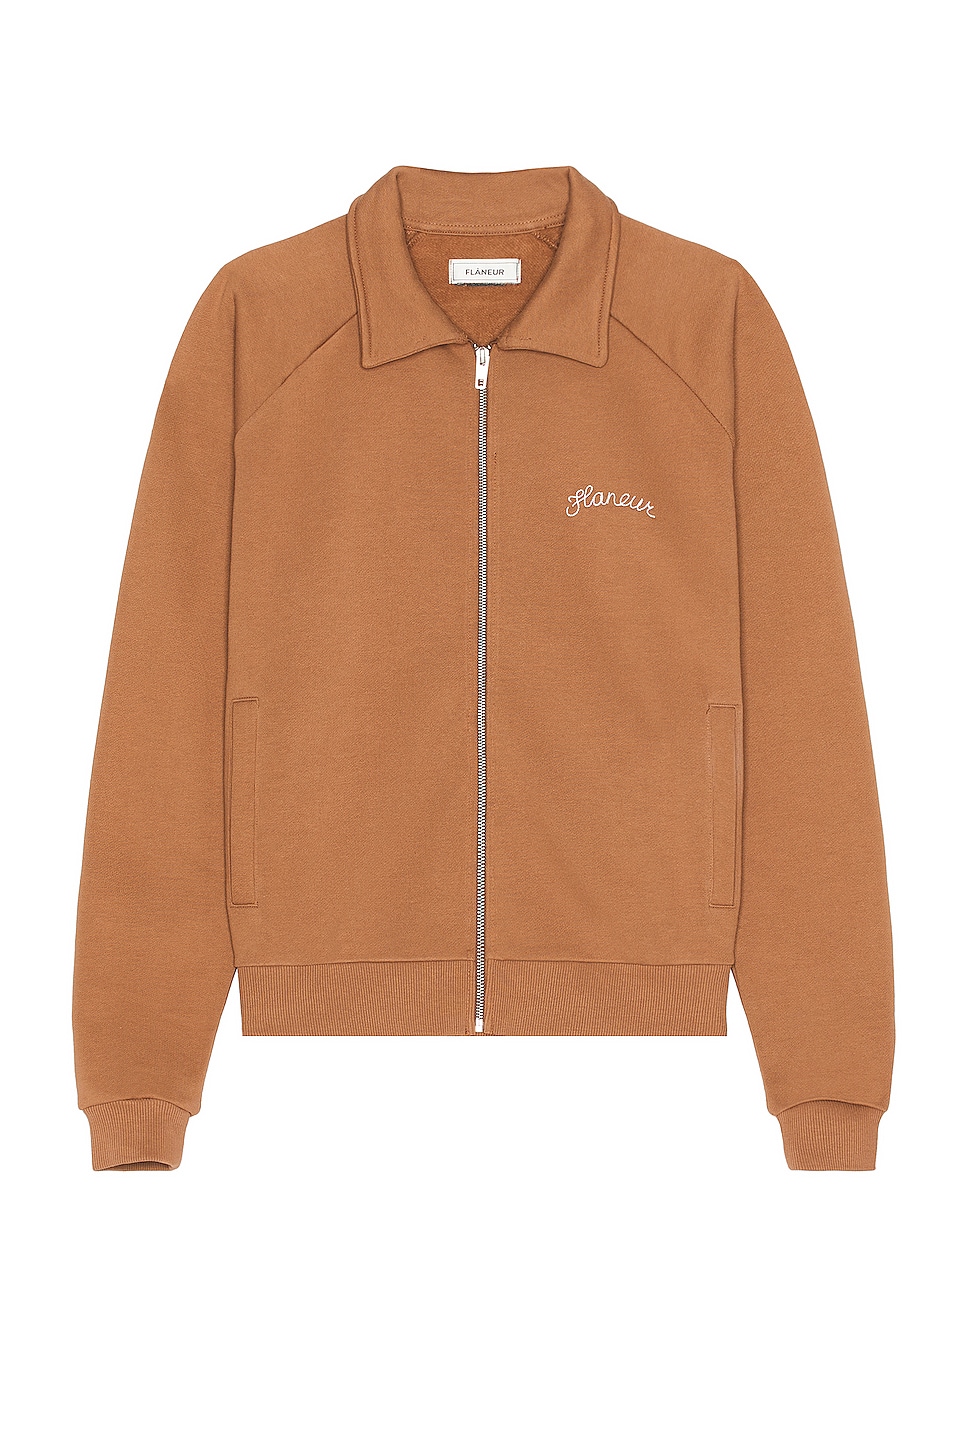 Куртка FLANEUR Signature Zip, коричневый